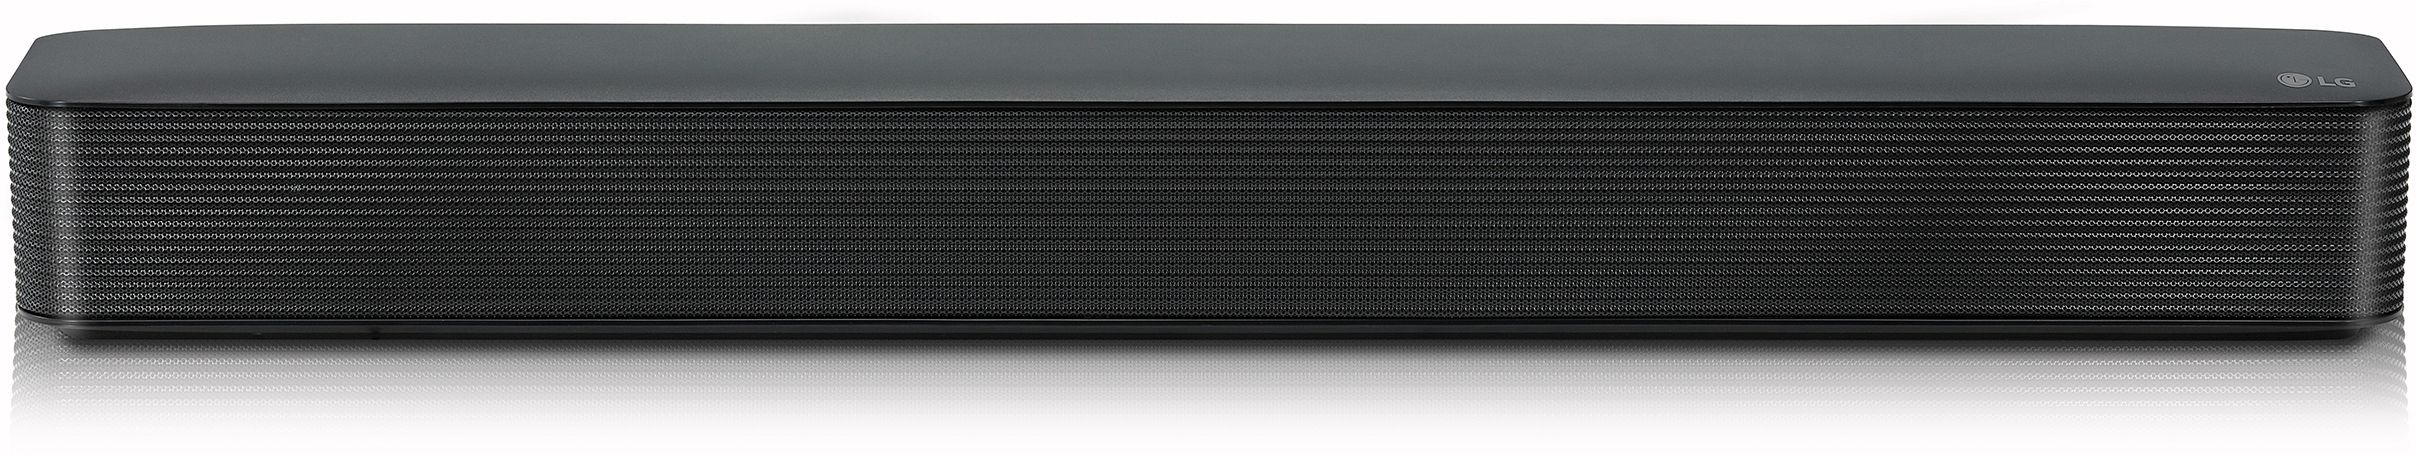 LG 2.0 Channel Black Compact Sound Bar